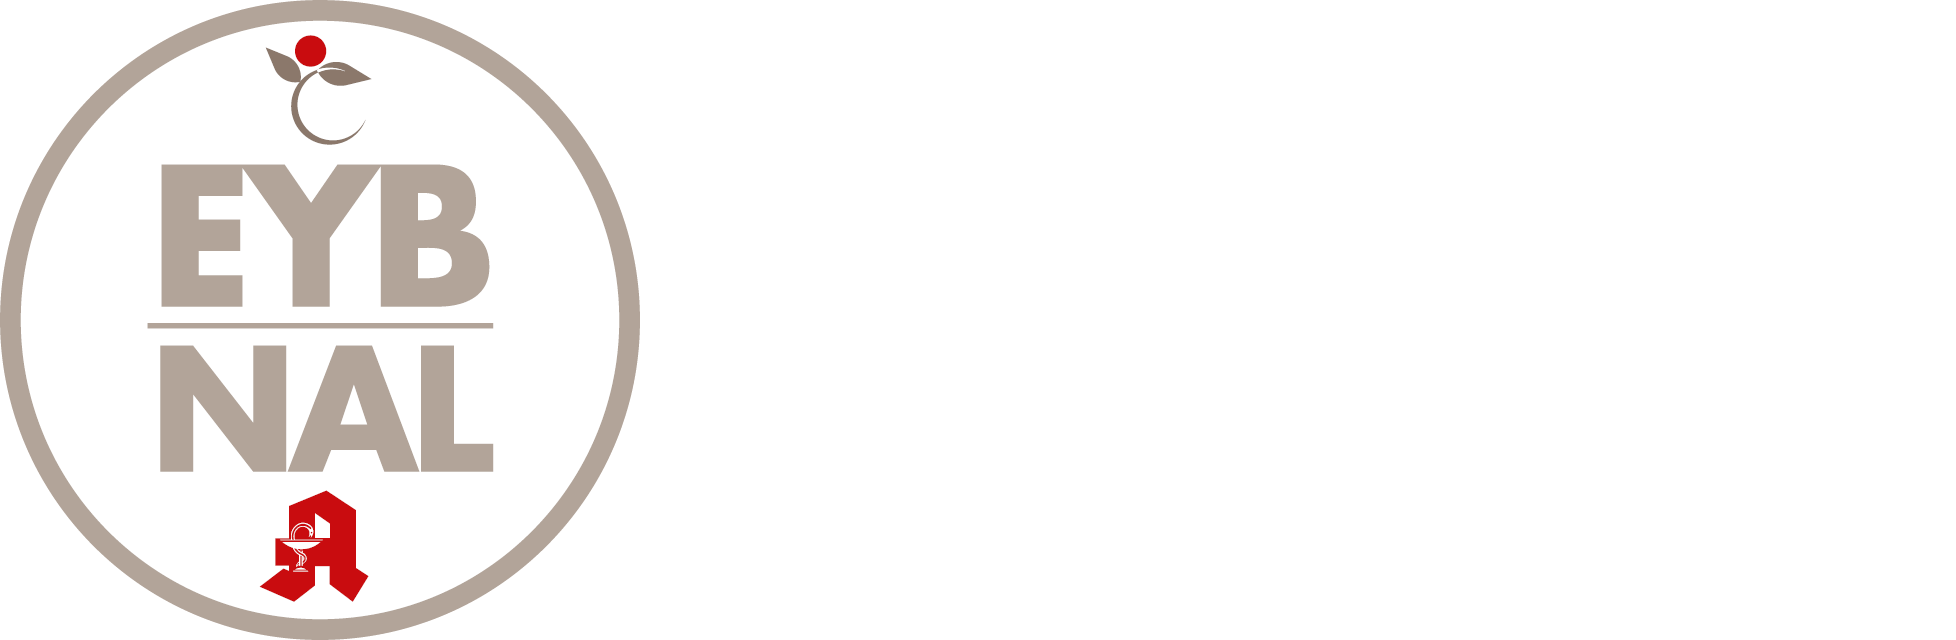 Apotheke Eyb, Neue Apotheke Lichtenau, Logo